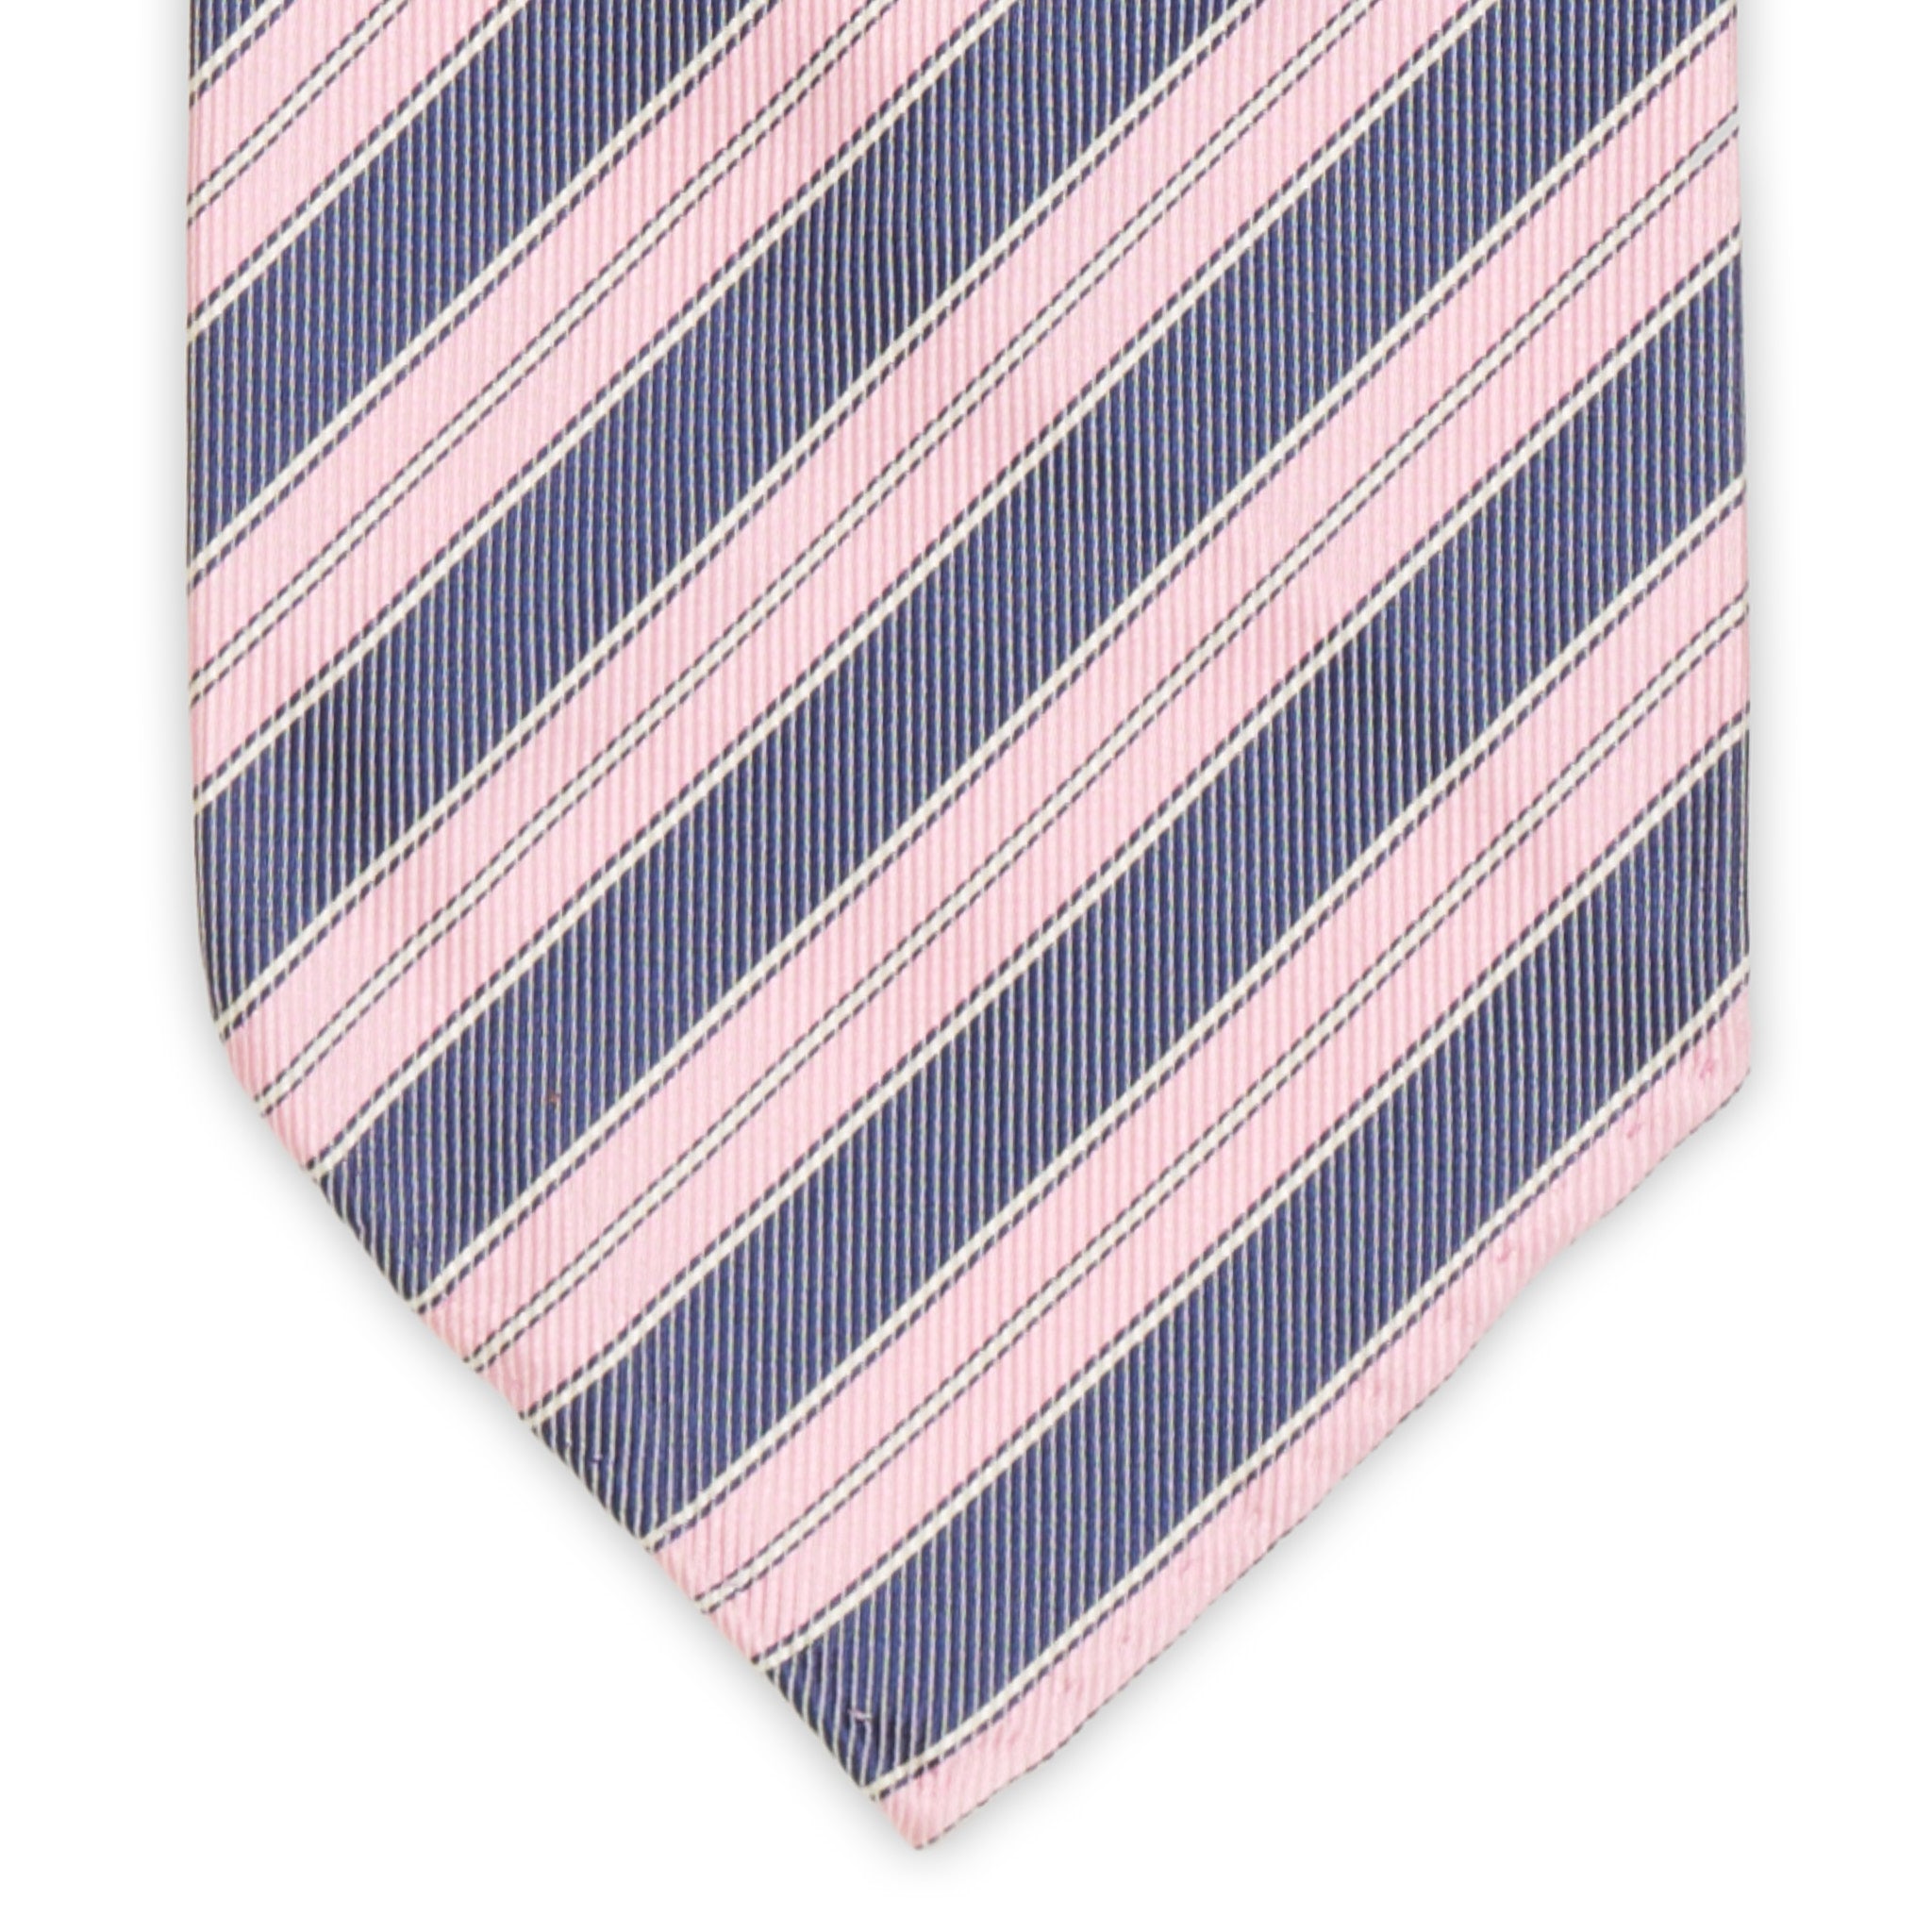 CESARE ATTOLINI Handmade Blue-Pink Striped Design Silk Tie NEW CESARE ATTOLINI